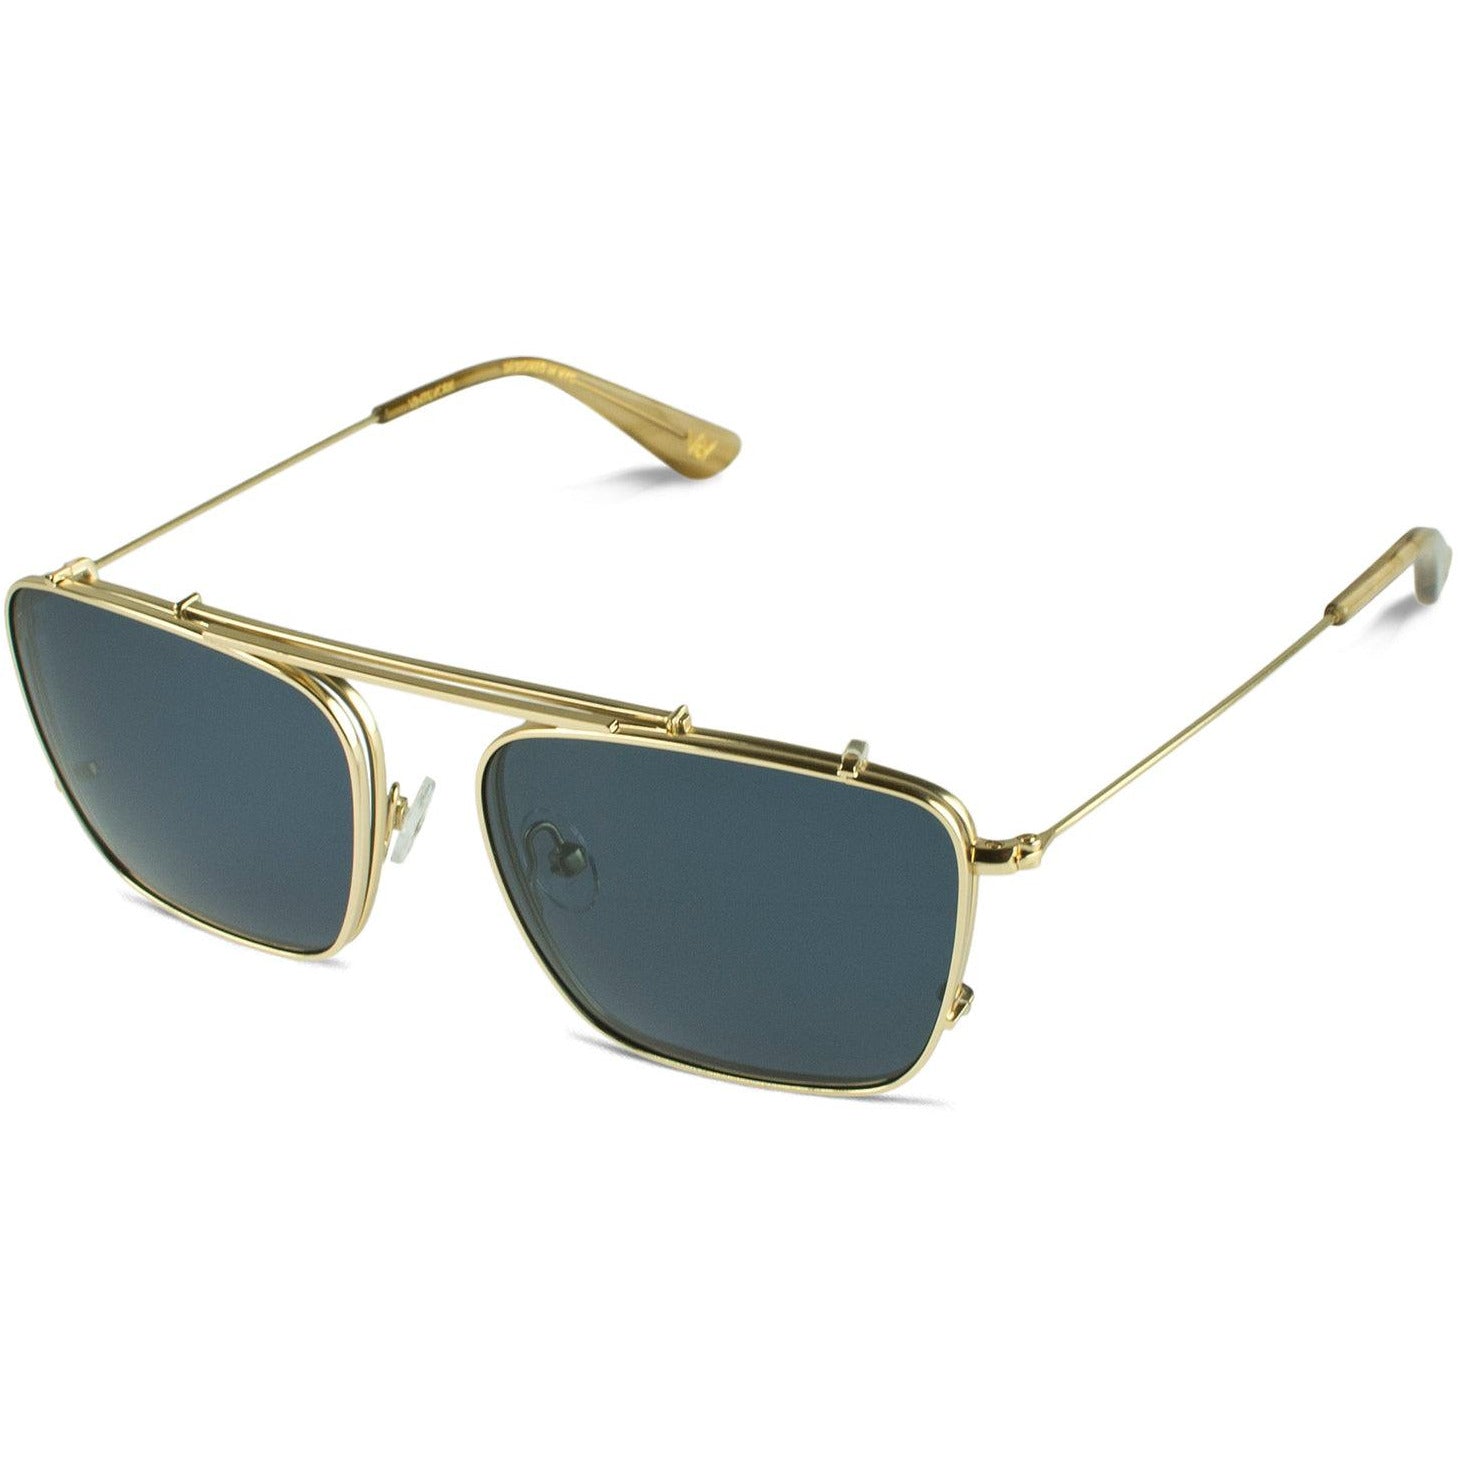 Buy Eymen I Fashion Square Aviator Sunglasses For Men Women Vintage Metal  Gradient Glasses Black Golden (Black) at Amazon.in